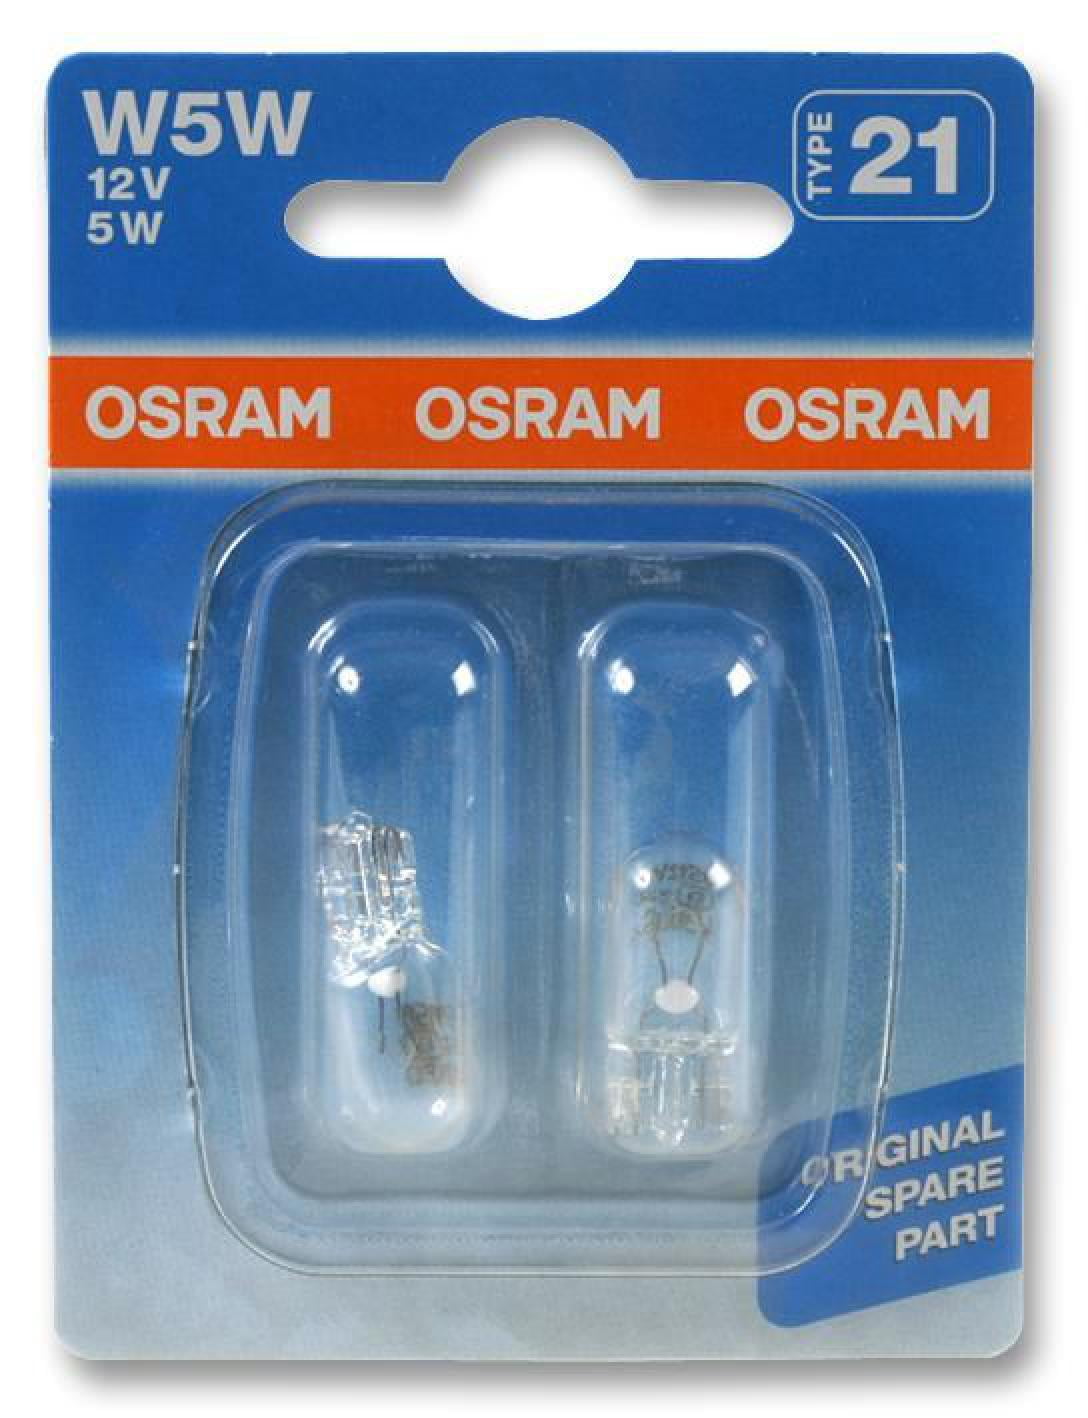 OSRAM - 12V 5W W5W W2x9.5d Car Side / Tail Light Bulb (Twin Pack